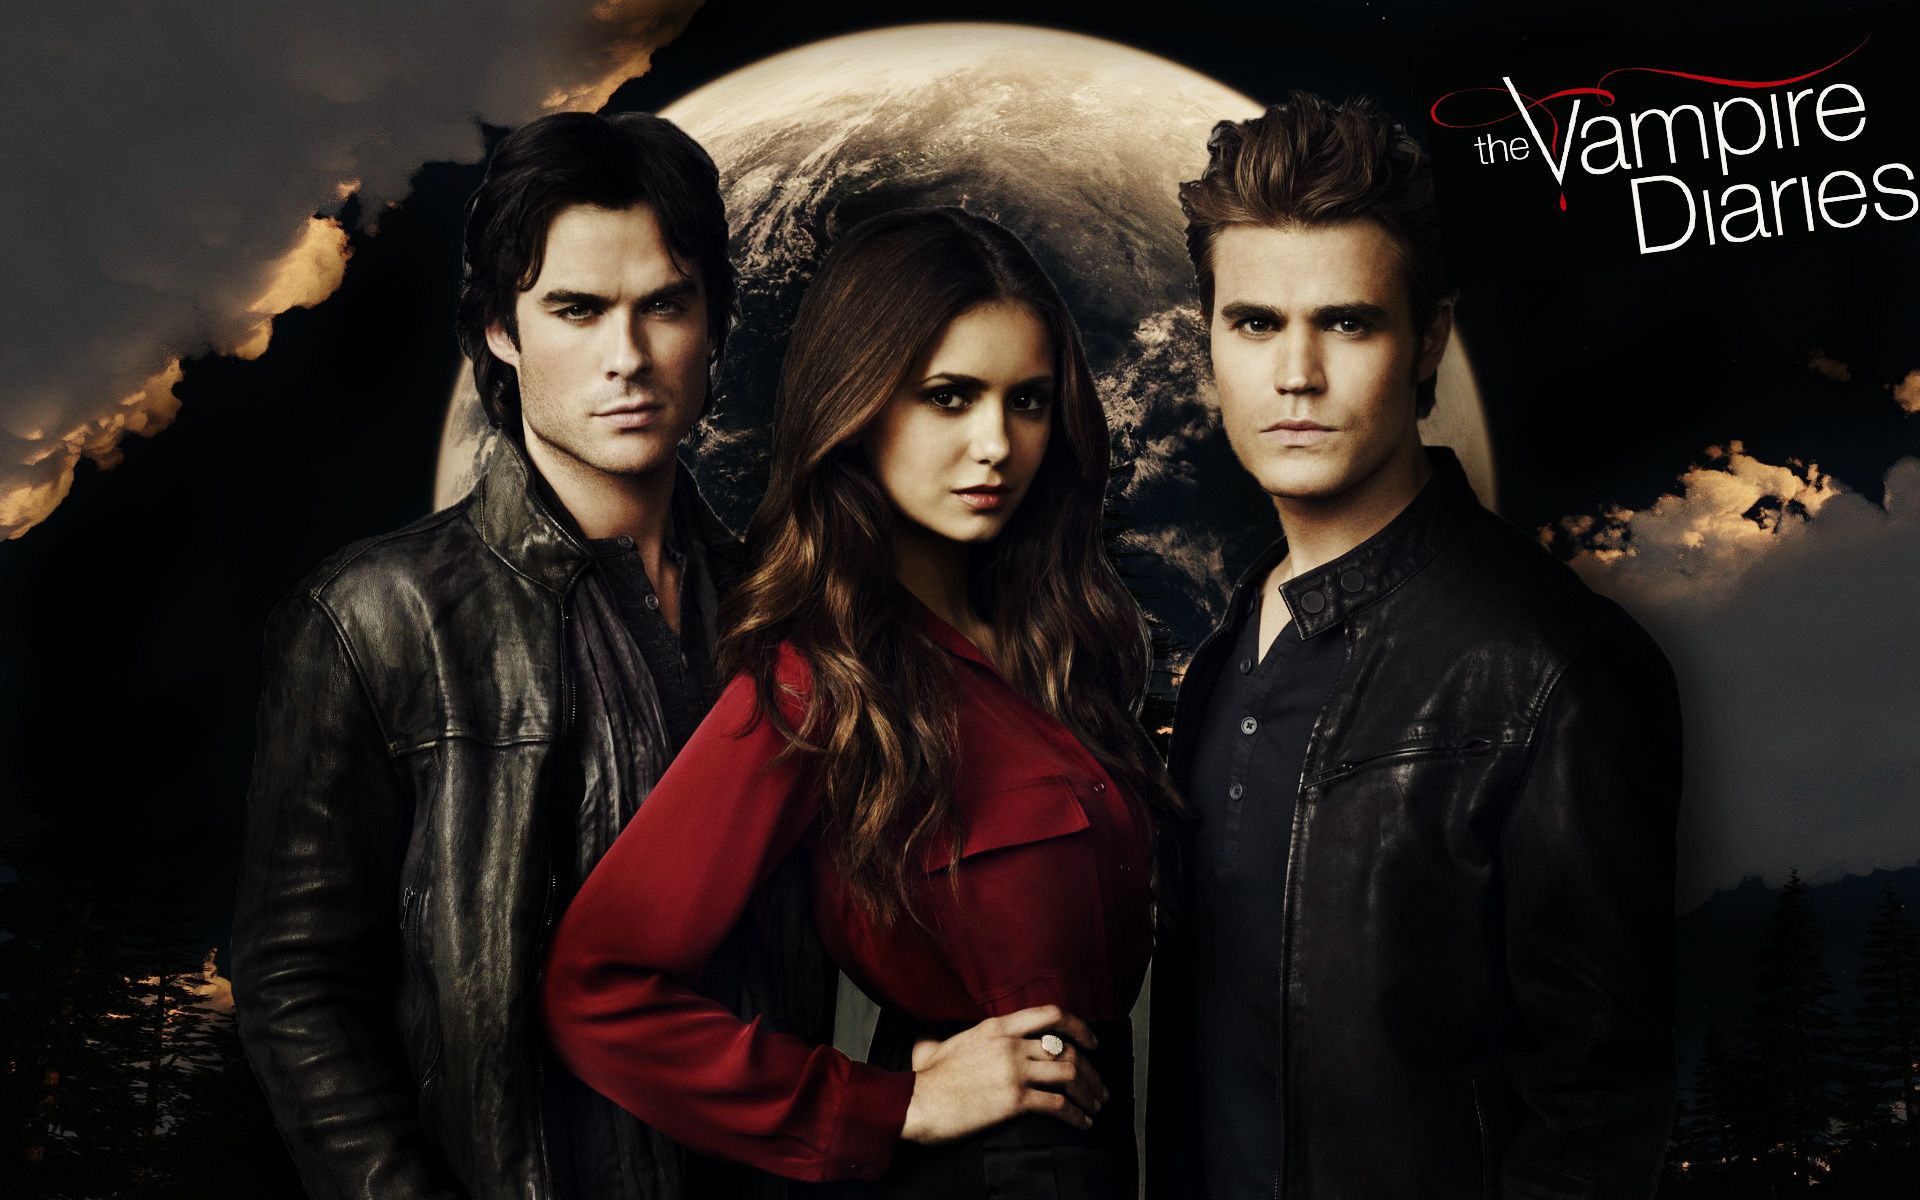 The Vampire Diaries season 5 - Wikipedia